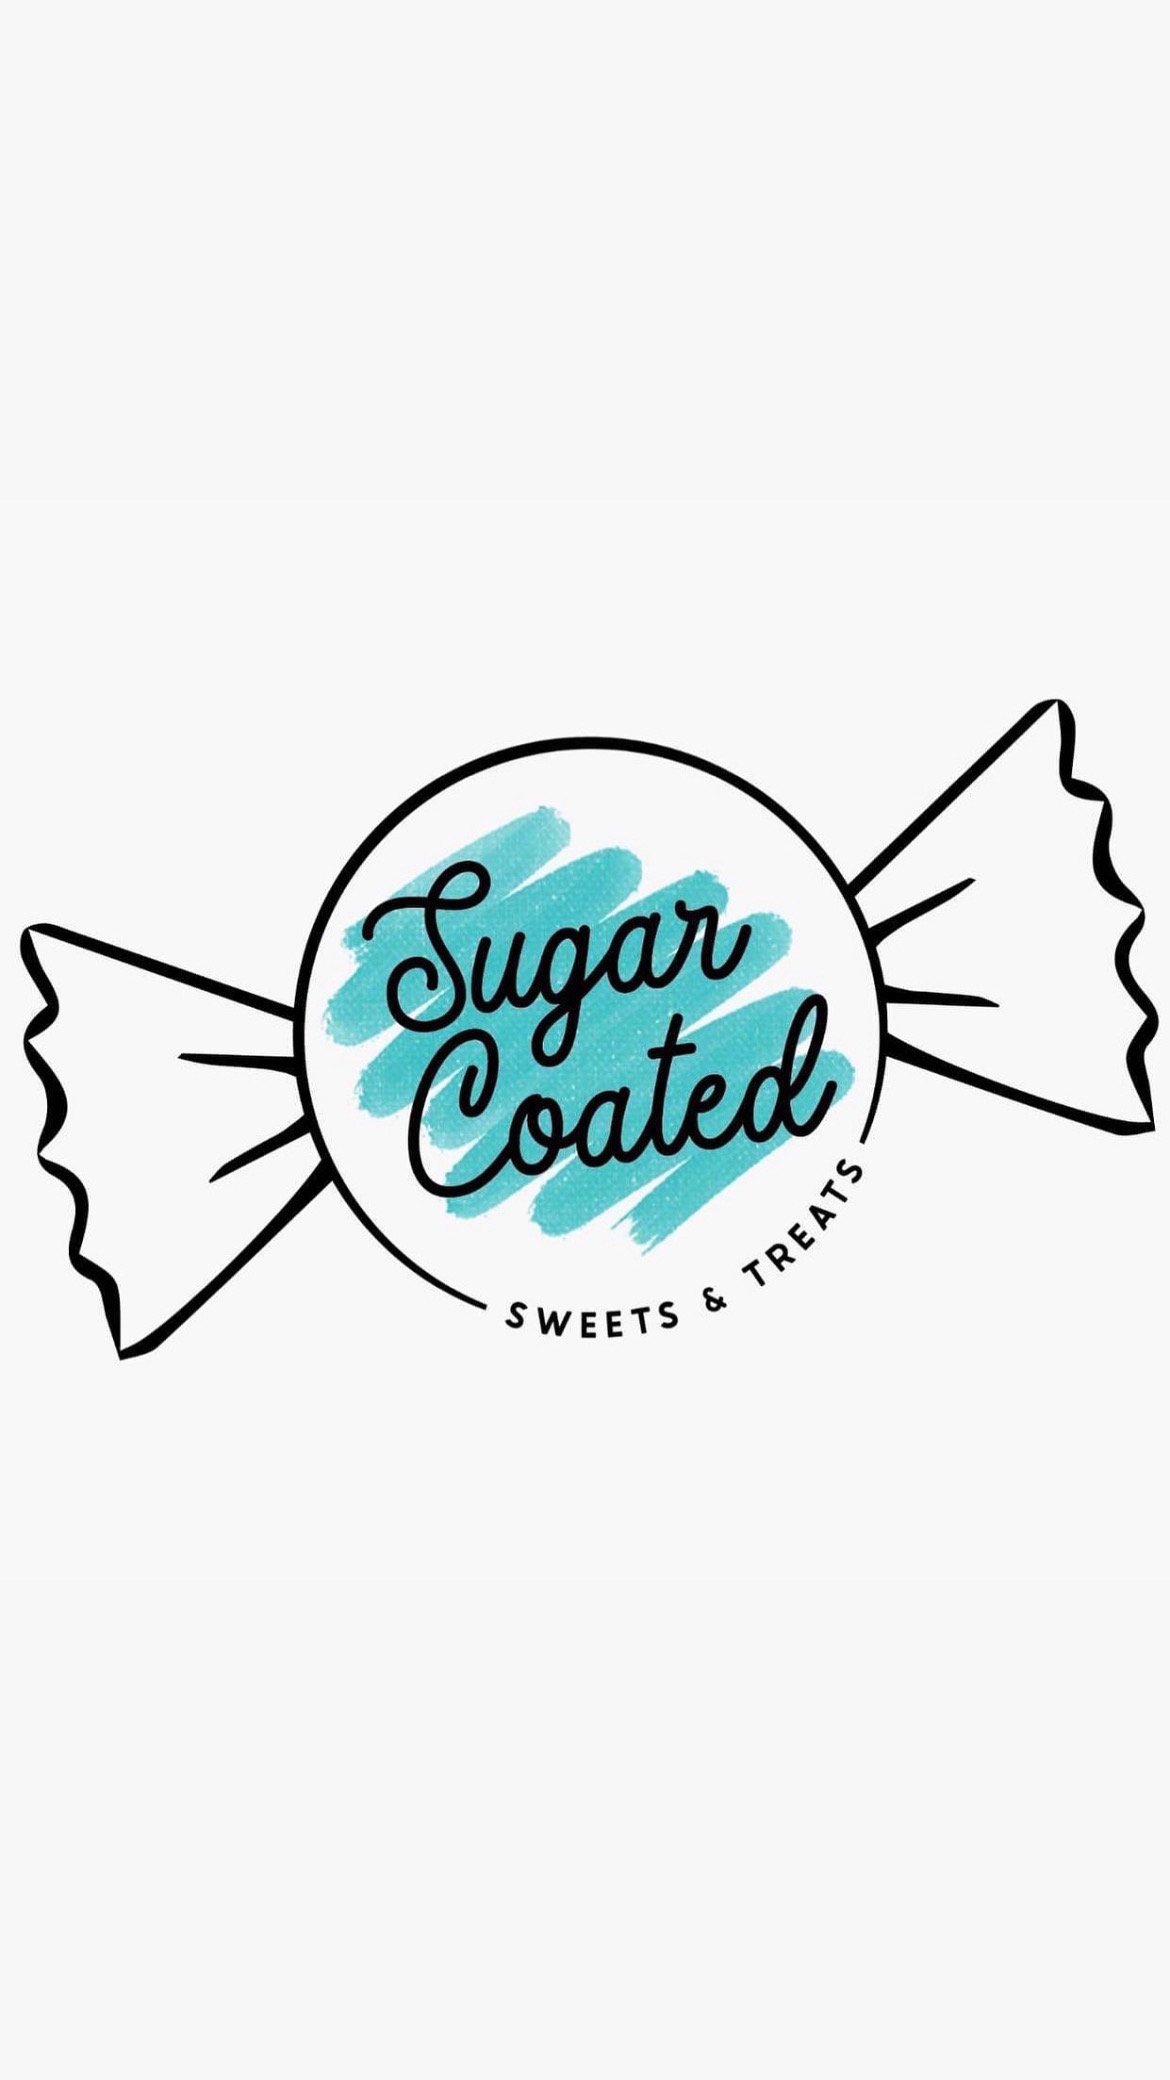 SugarCoated Sweets & Treats